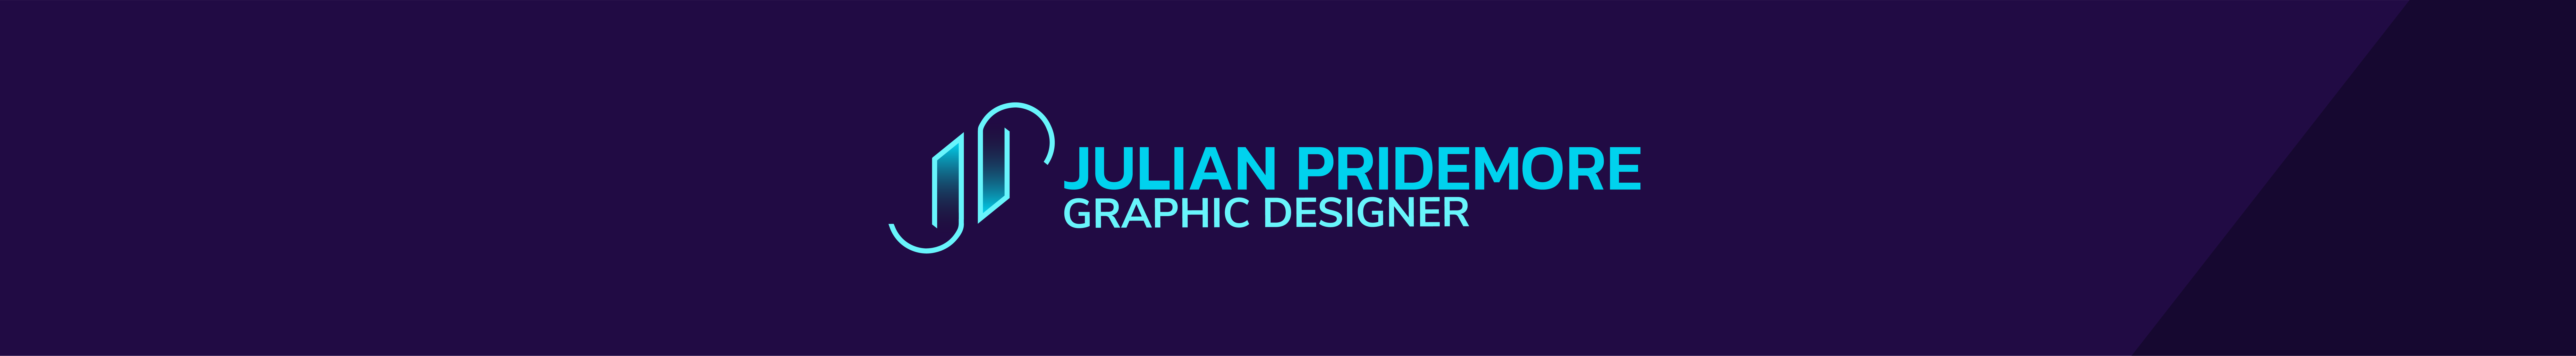 Banner de perfil de Julian Pridemore